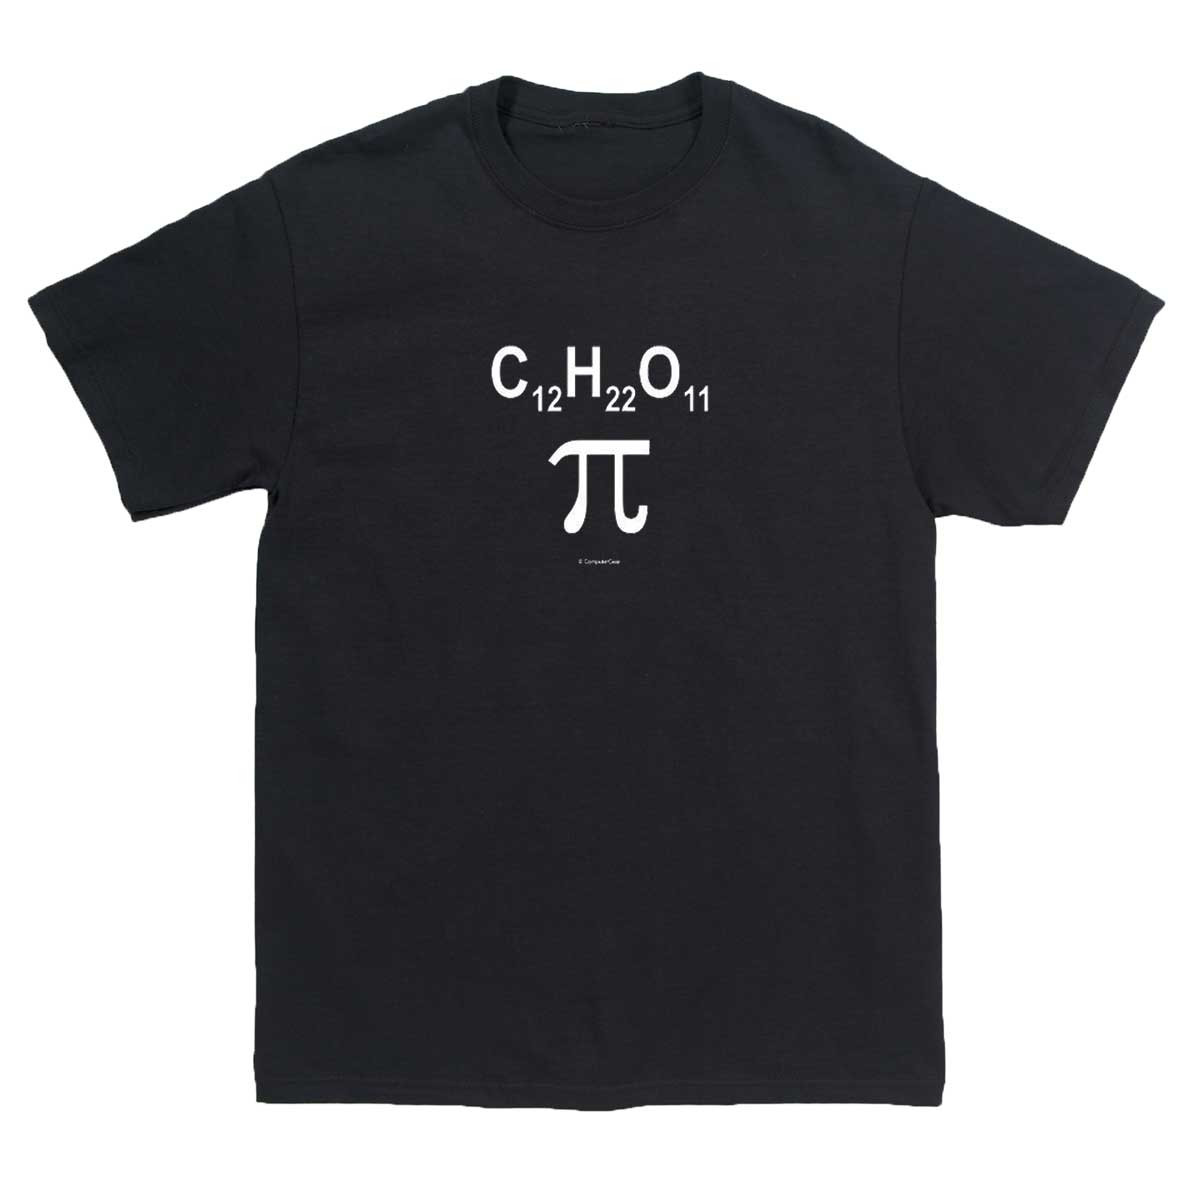 Cool Pi Day Shirt Ideas
 Smart girls won t mind being called a Sugar Pi wearing